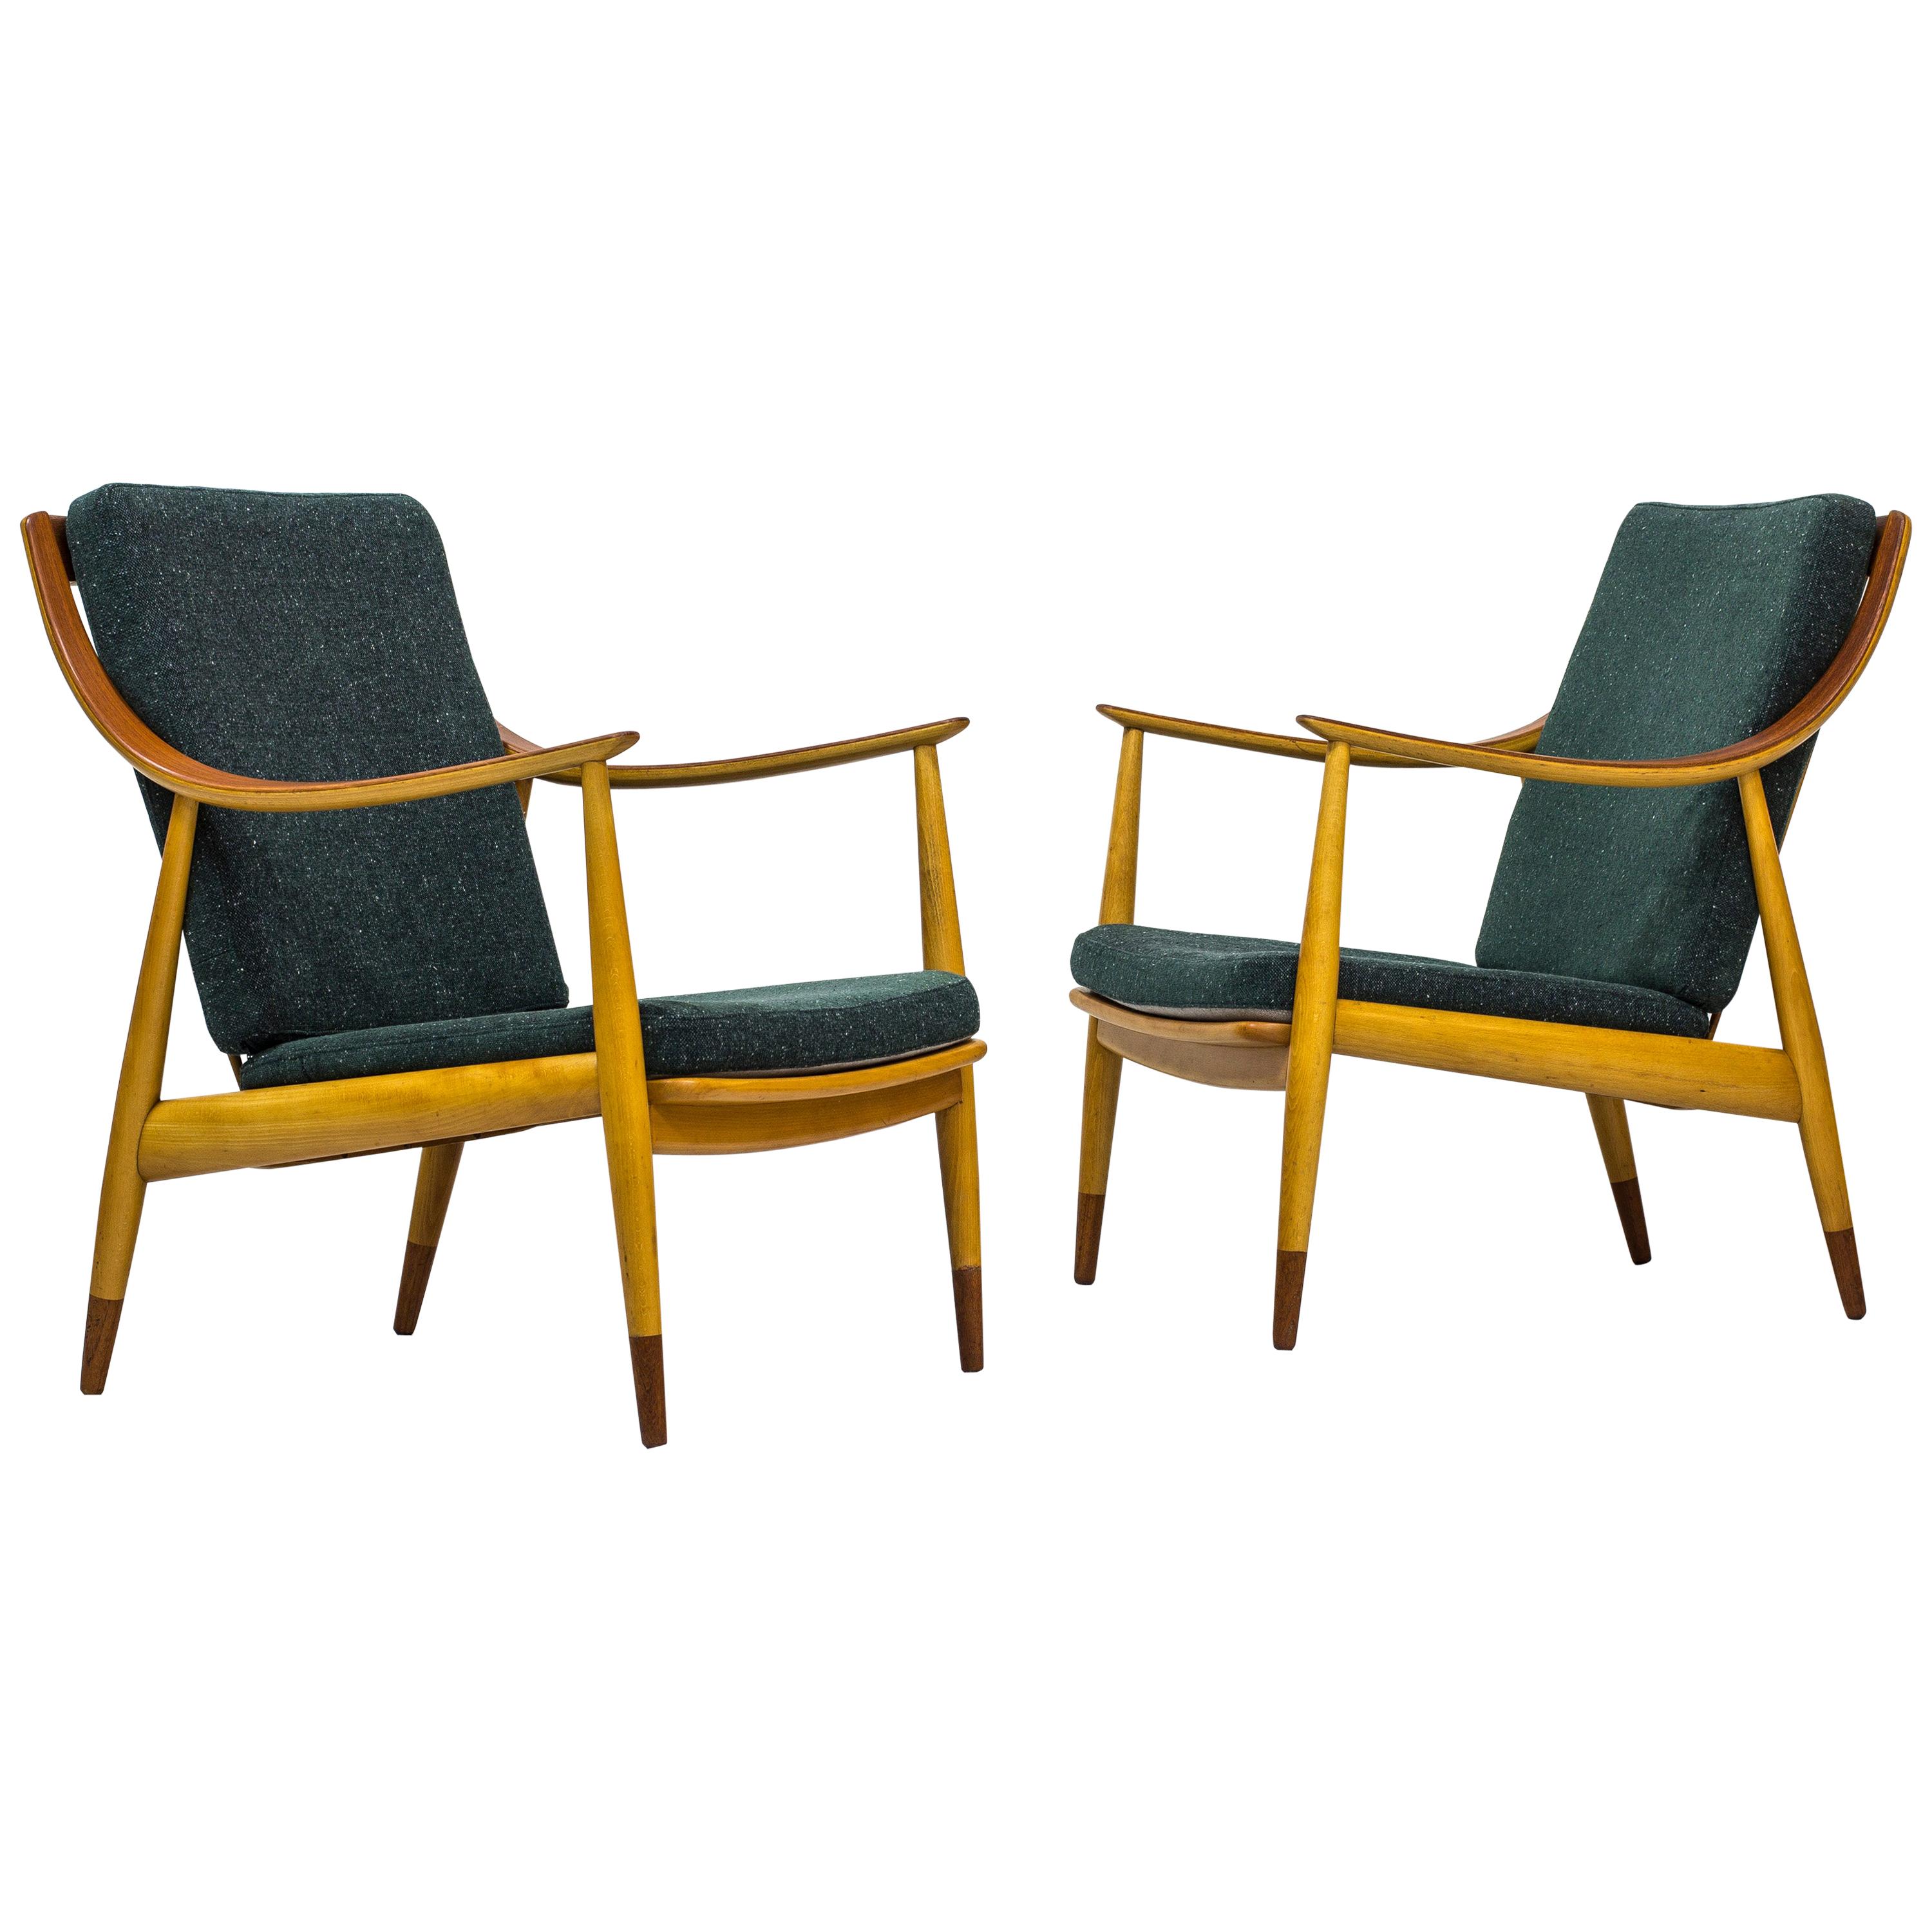 Danish Easy Chairs "FD 145" by Peter Hvidt & Orla Mølgaard-Nielsen